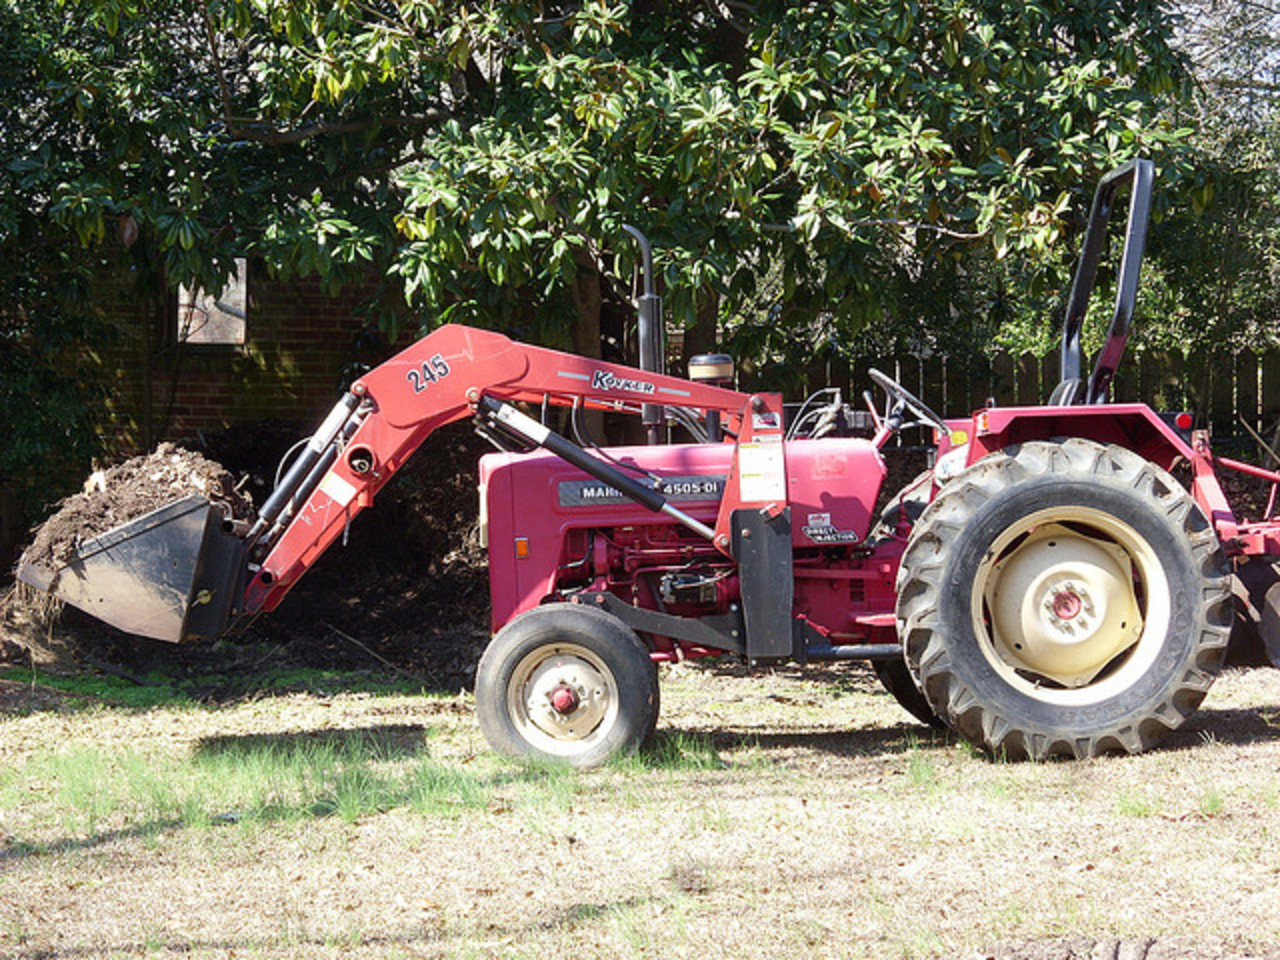 International tractors B-250 etc - a gallery on Flickr